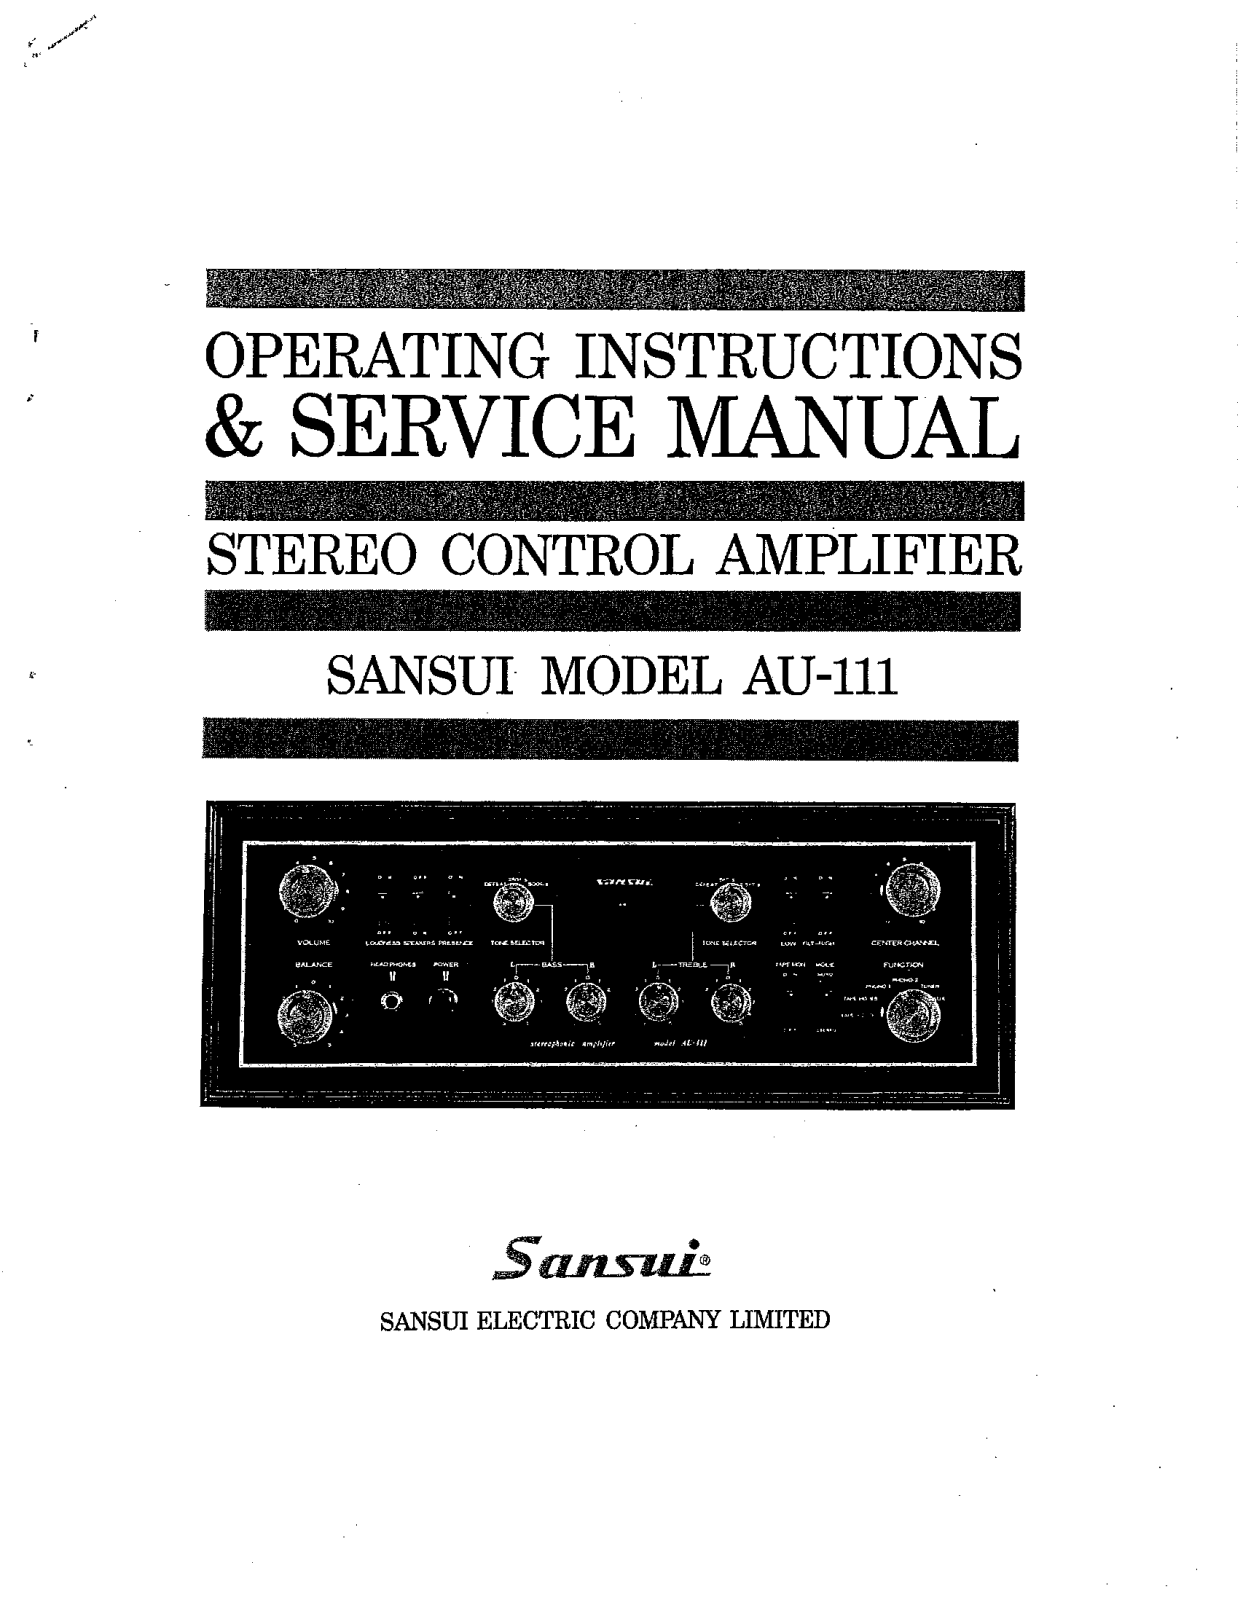 Sansui AU-111 Service Manual